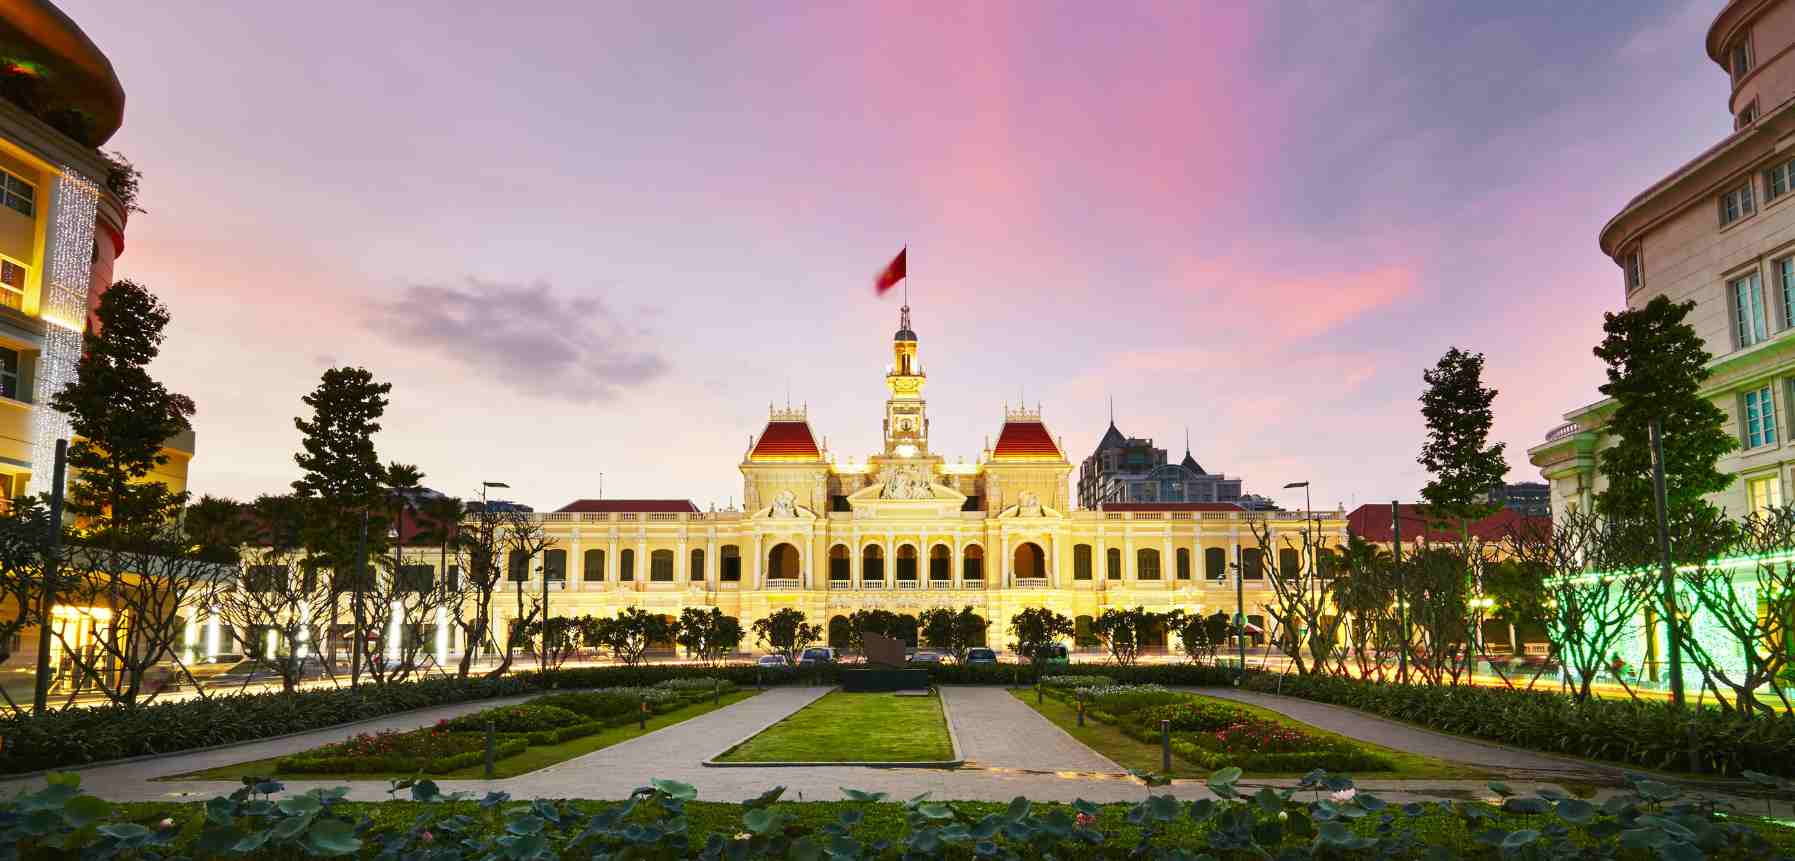 Ho Chi Minh City: Explore its bustling streets